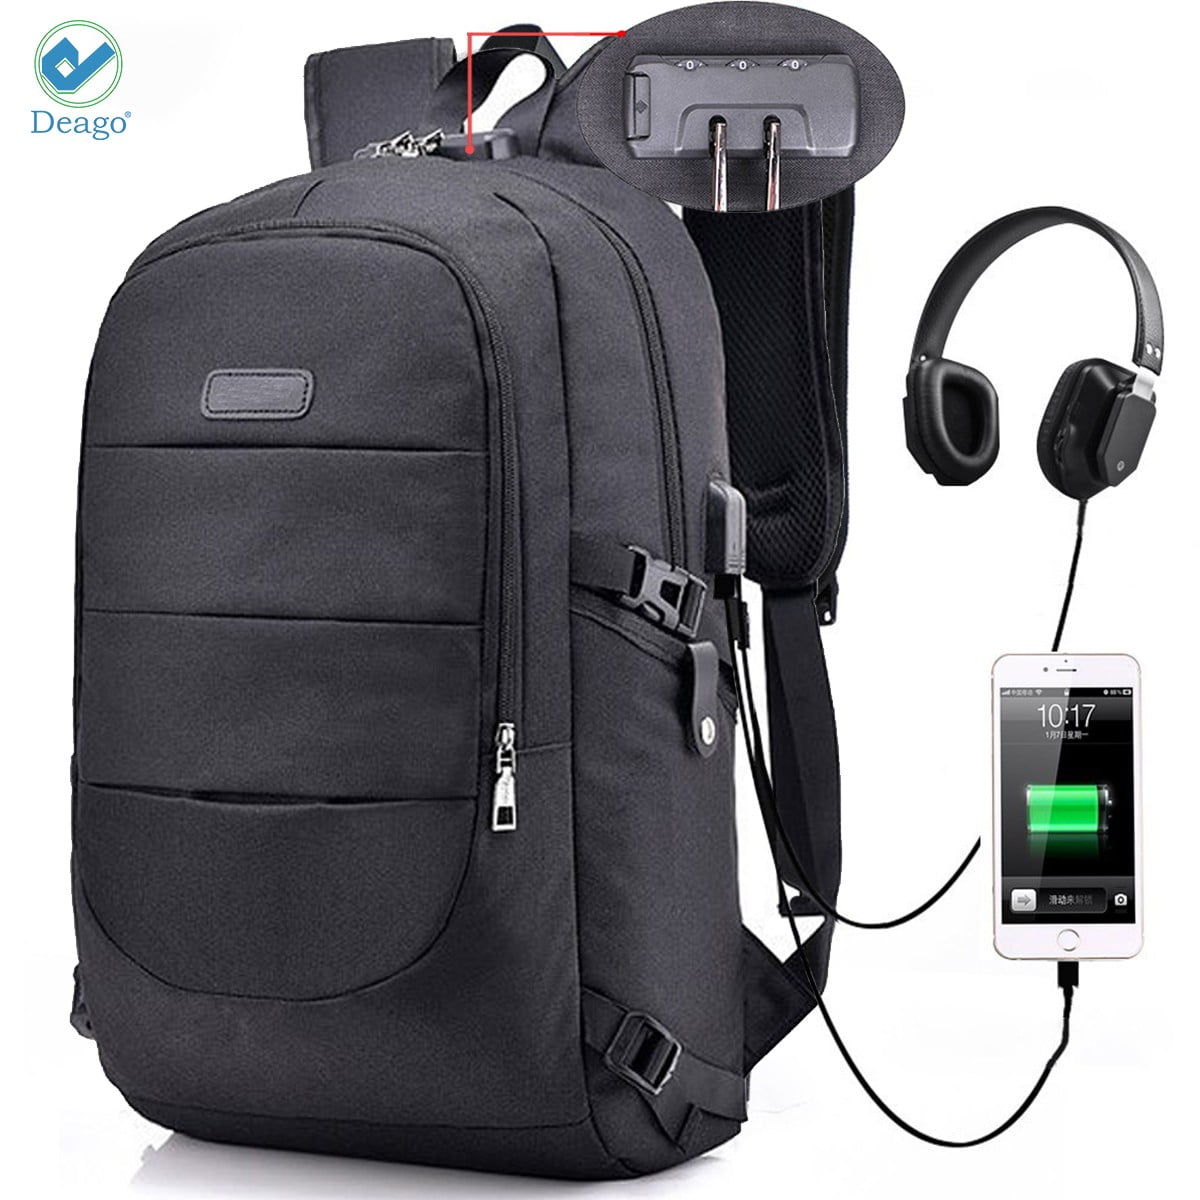 My Neighbour The Doctor Snow Version Backpack Daypack Rucksack Laptop Shoulder Bag with USB Charging Port 